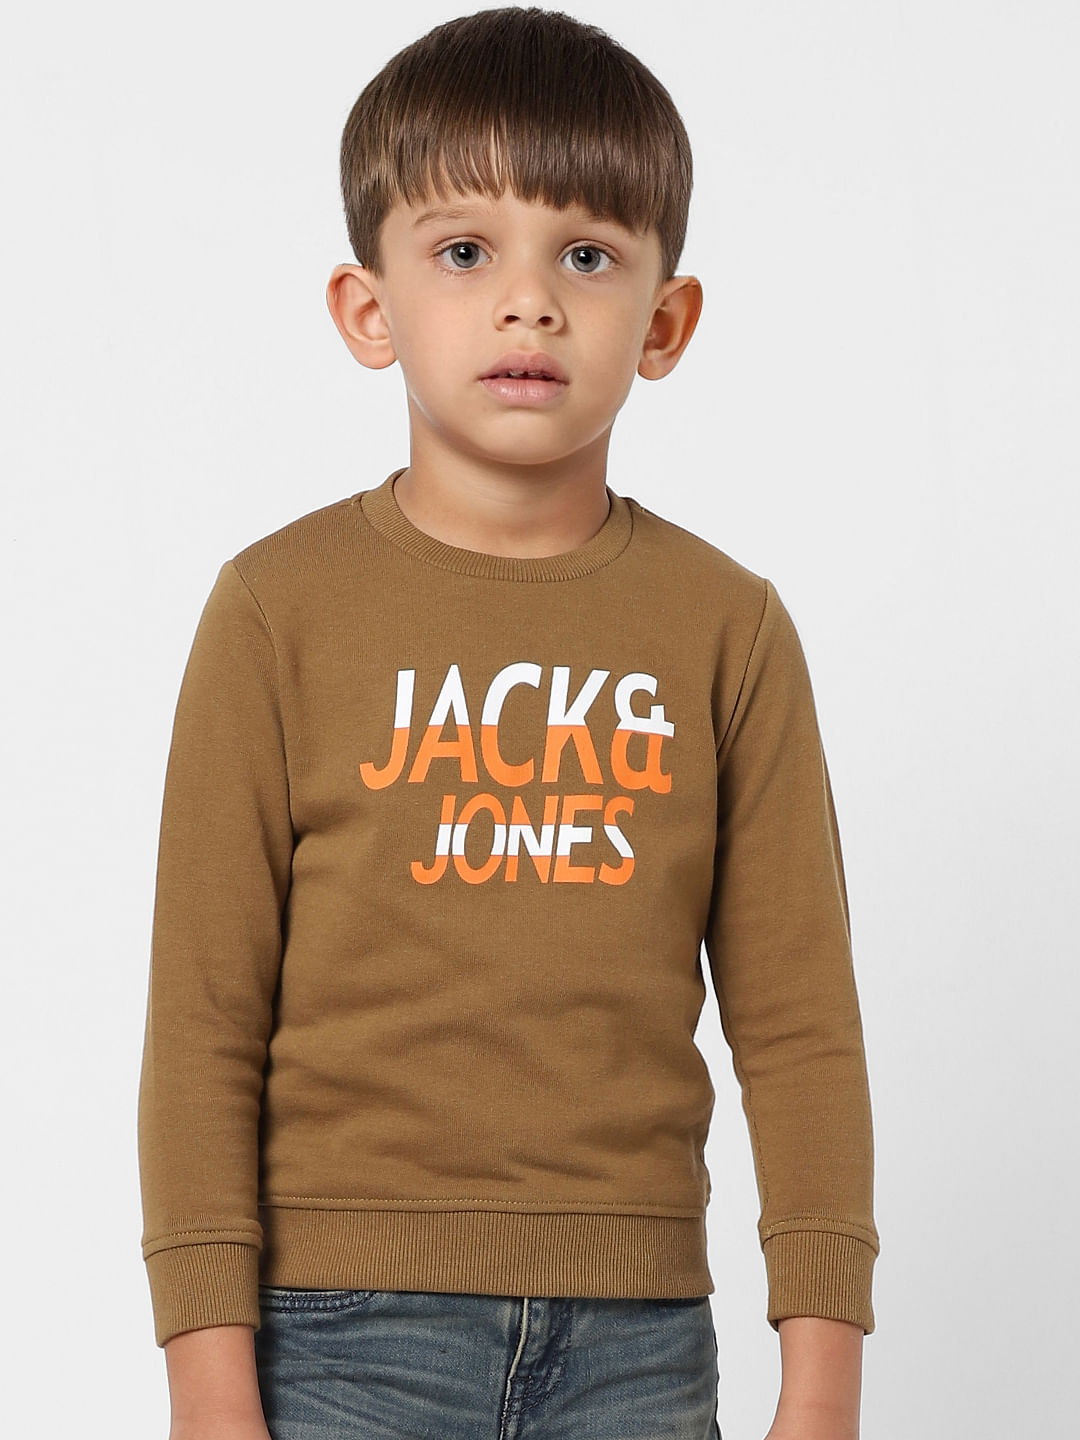 discount 57% Jack & Jones sweatshirt KIDS FASHION Jumpers & Sweatshirts Sports Green 152                  EU 